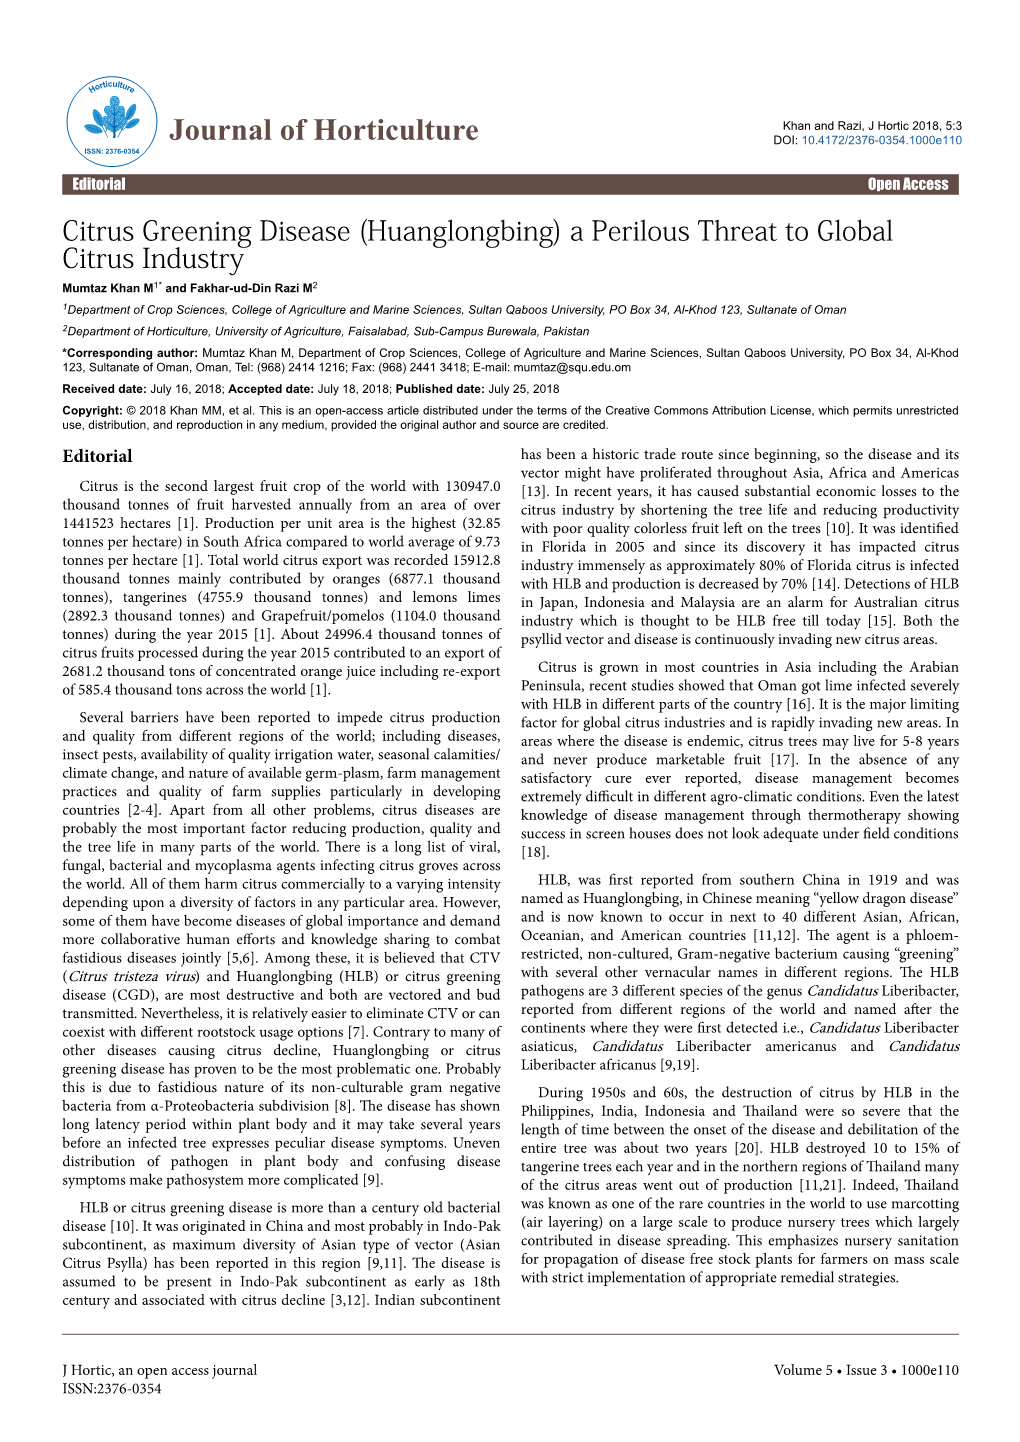 Citrus Greening Disease (Huanglongbing) a Perilous Threat To